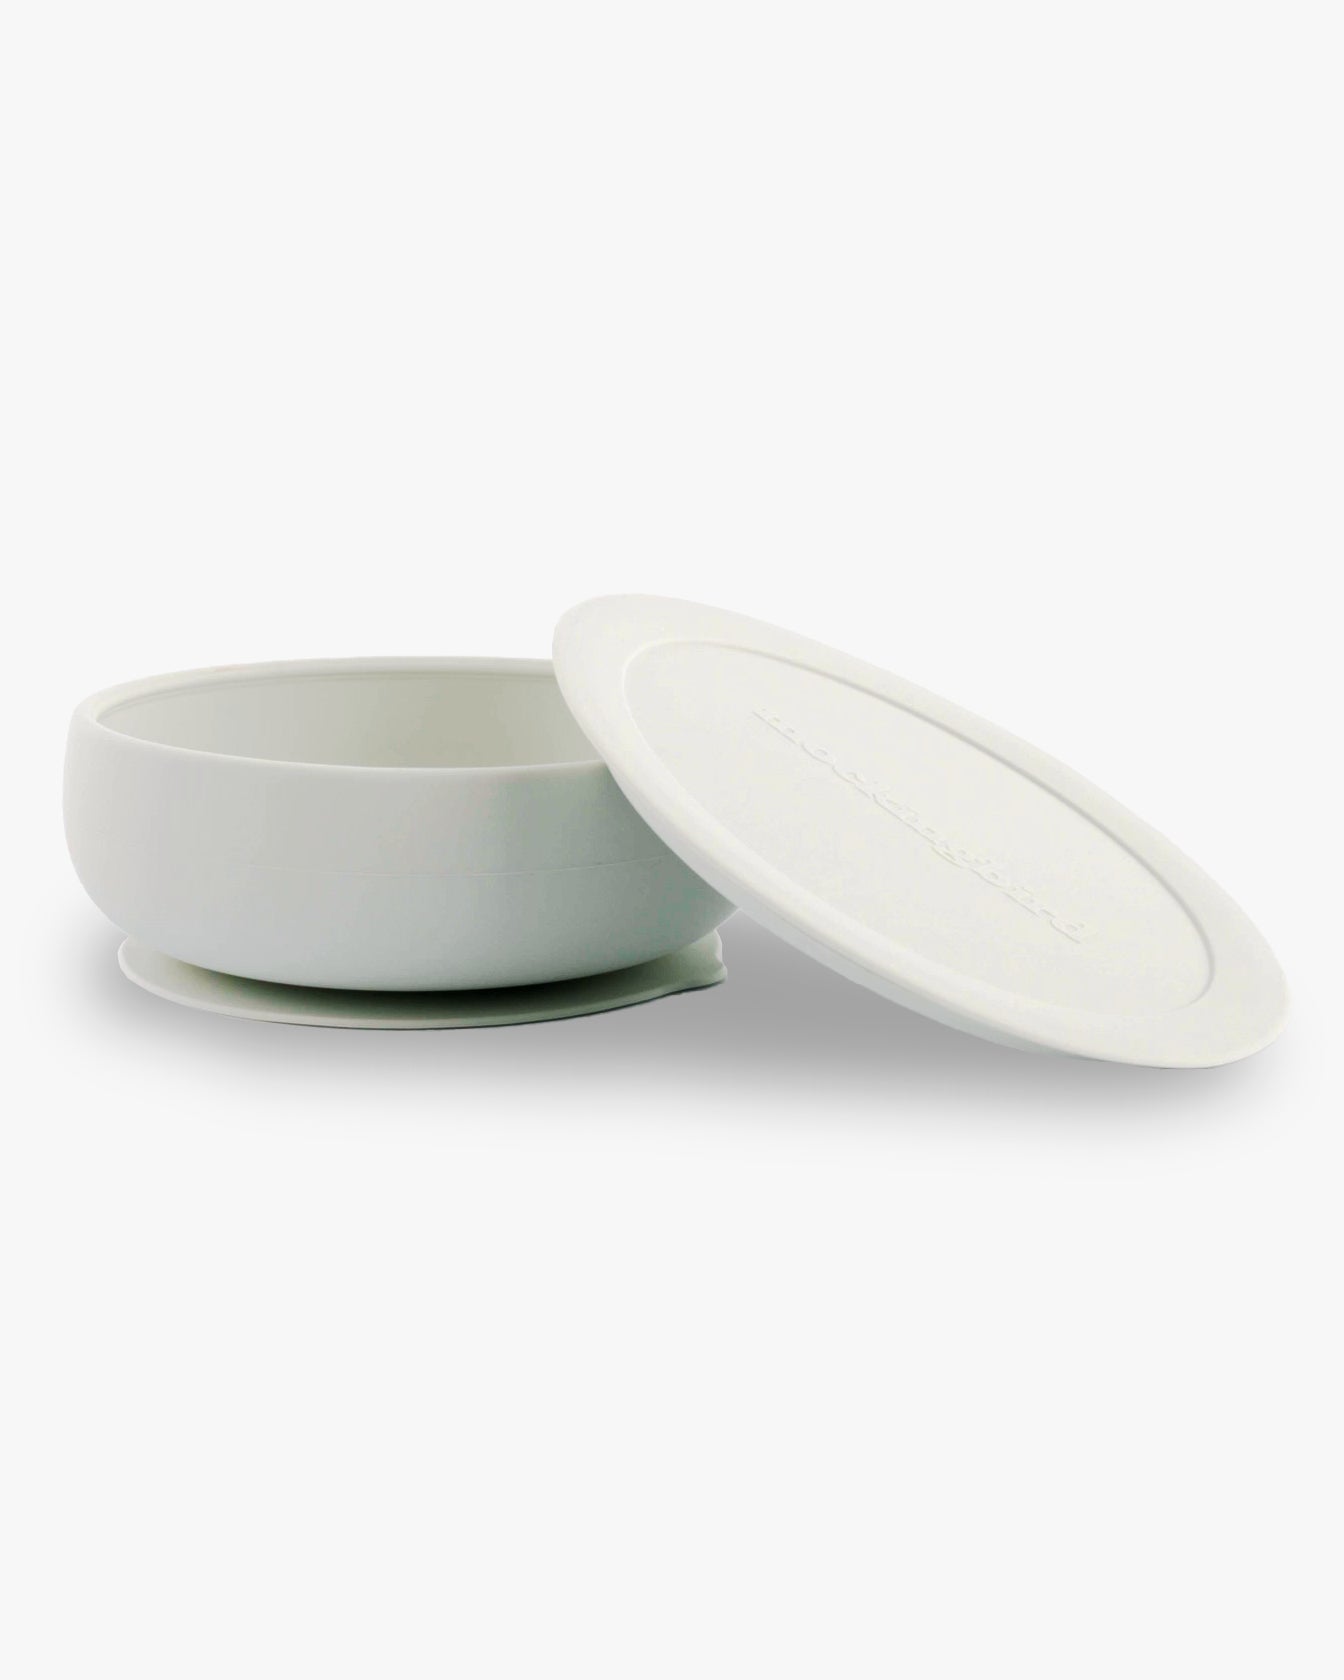 Mockingbird dishware set showing the light grey bowl and lid